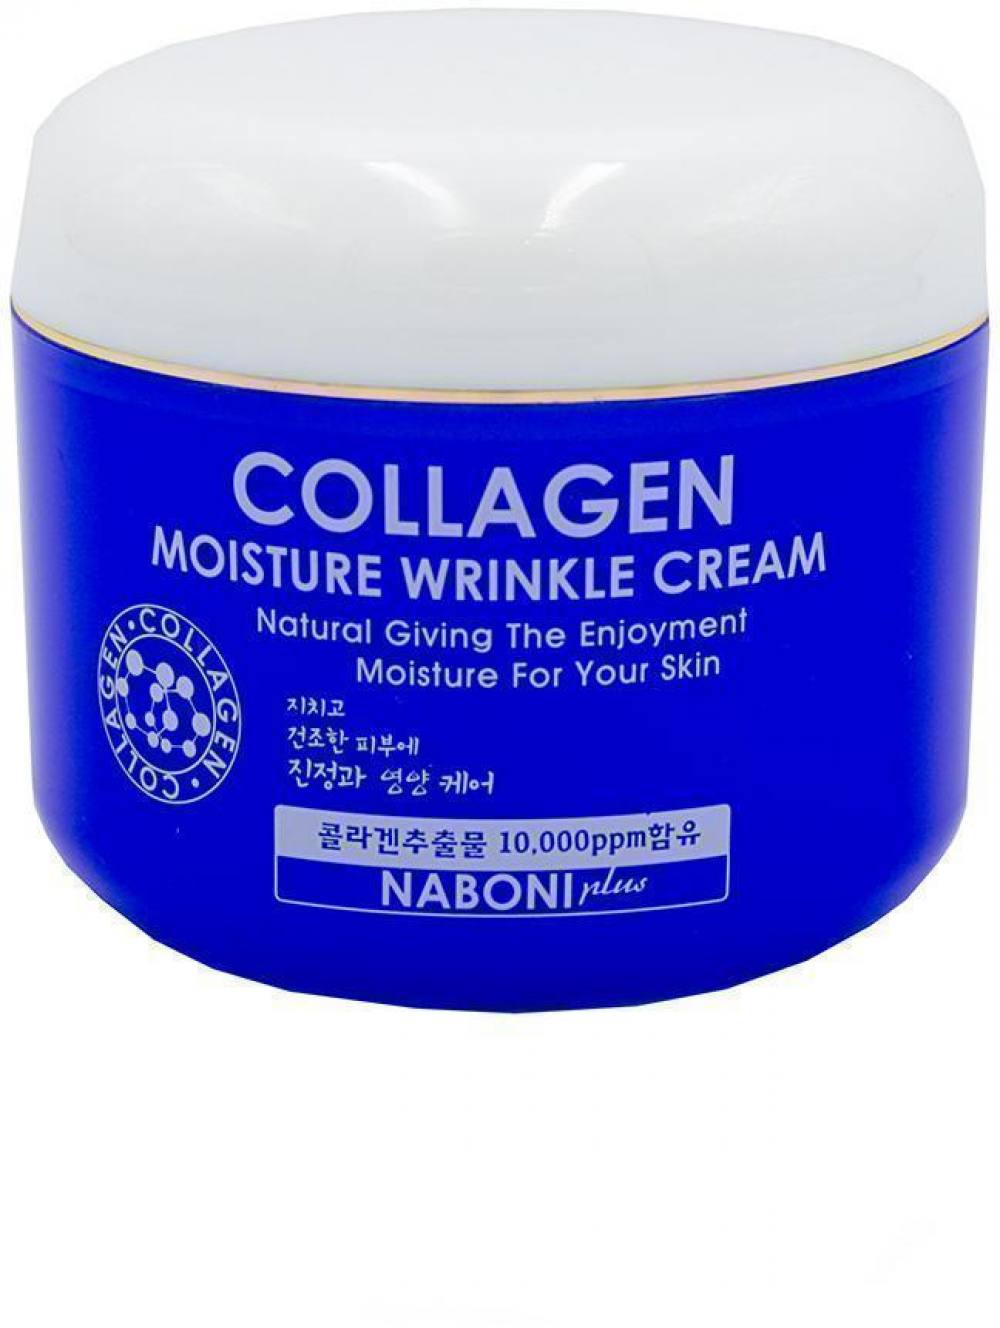 Подтягивающий кожу крем NABONI Collagen Moisture Wrinkle Cream. Артикул 082300041